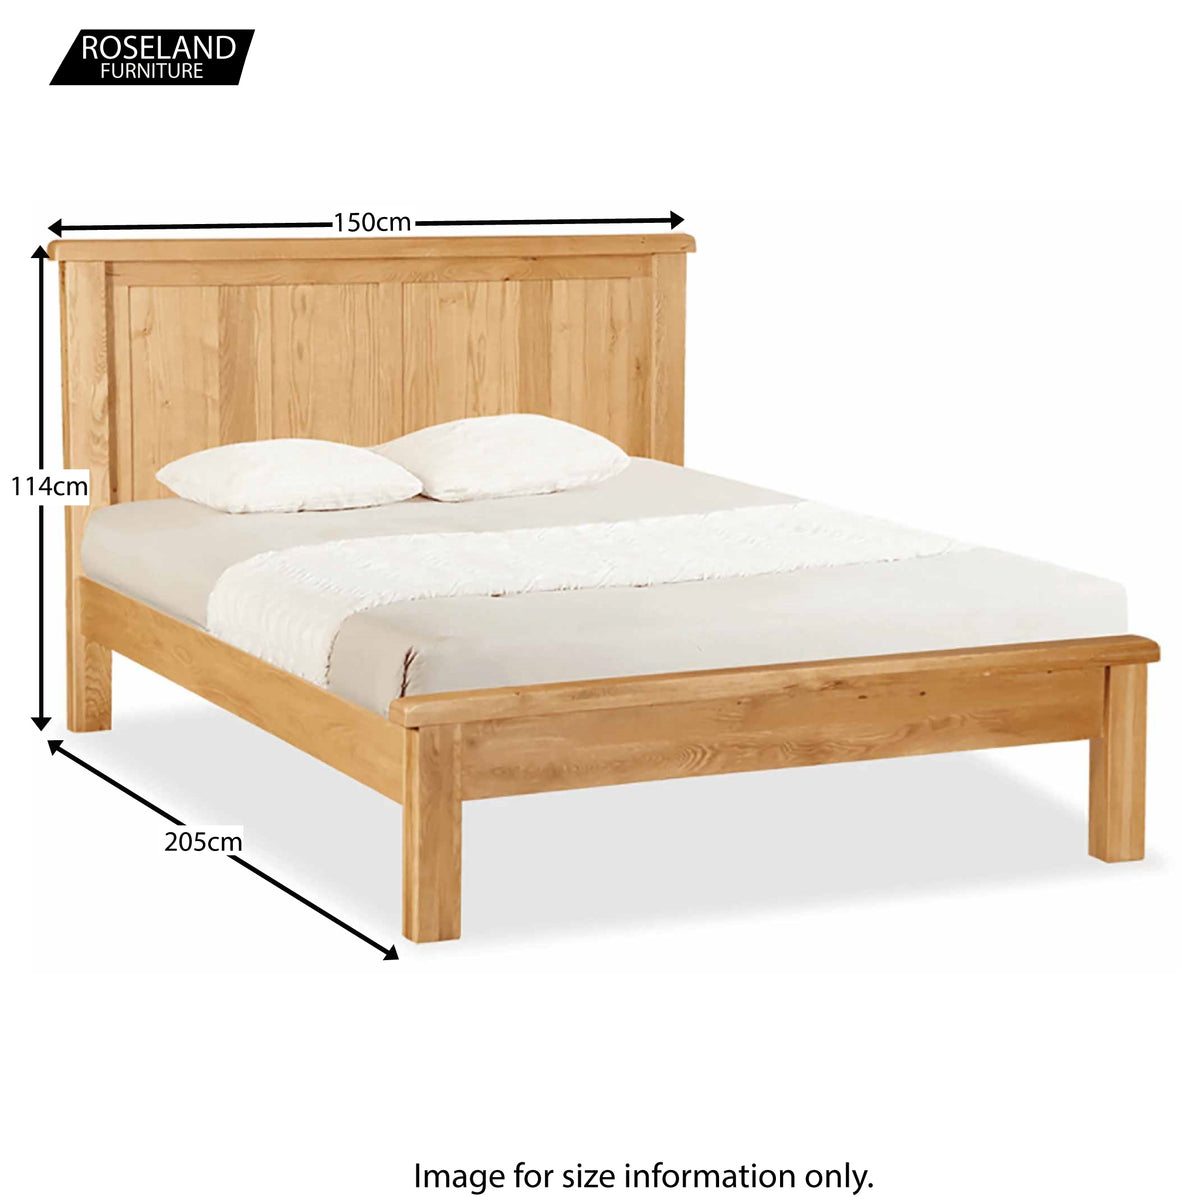 Zelak Oak Panelled 4ft 6 Double Bed from Roseland furniture